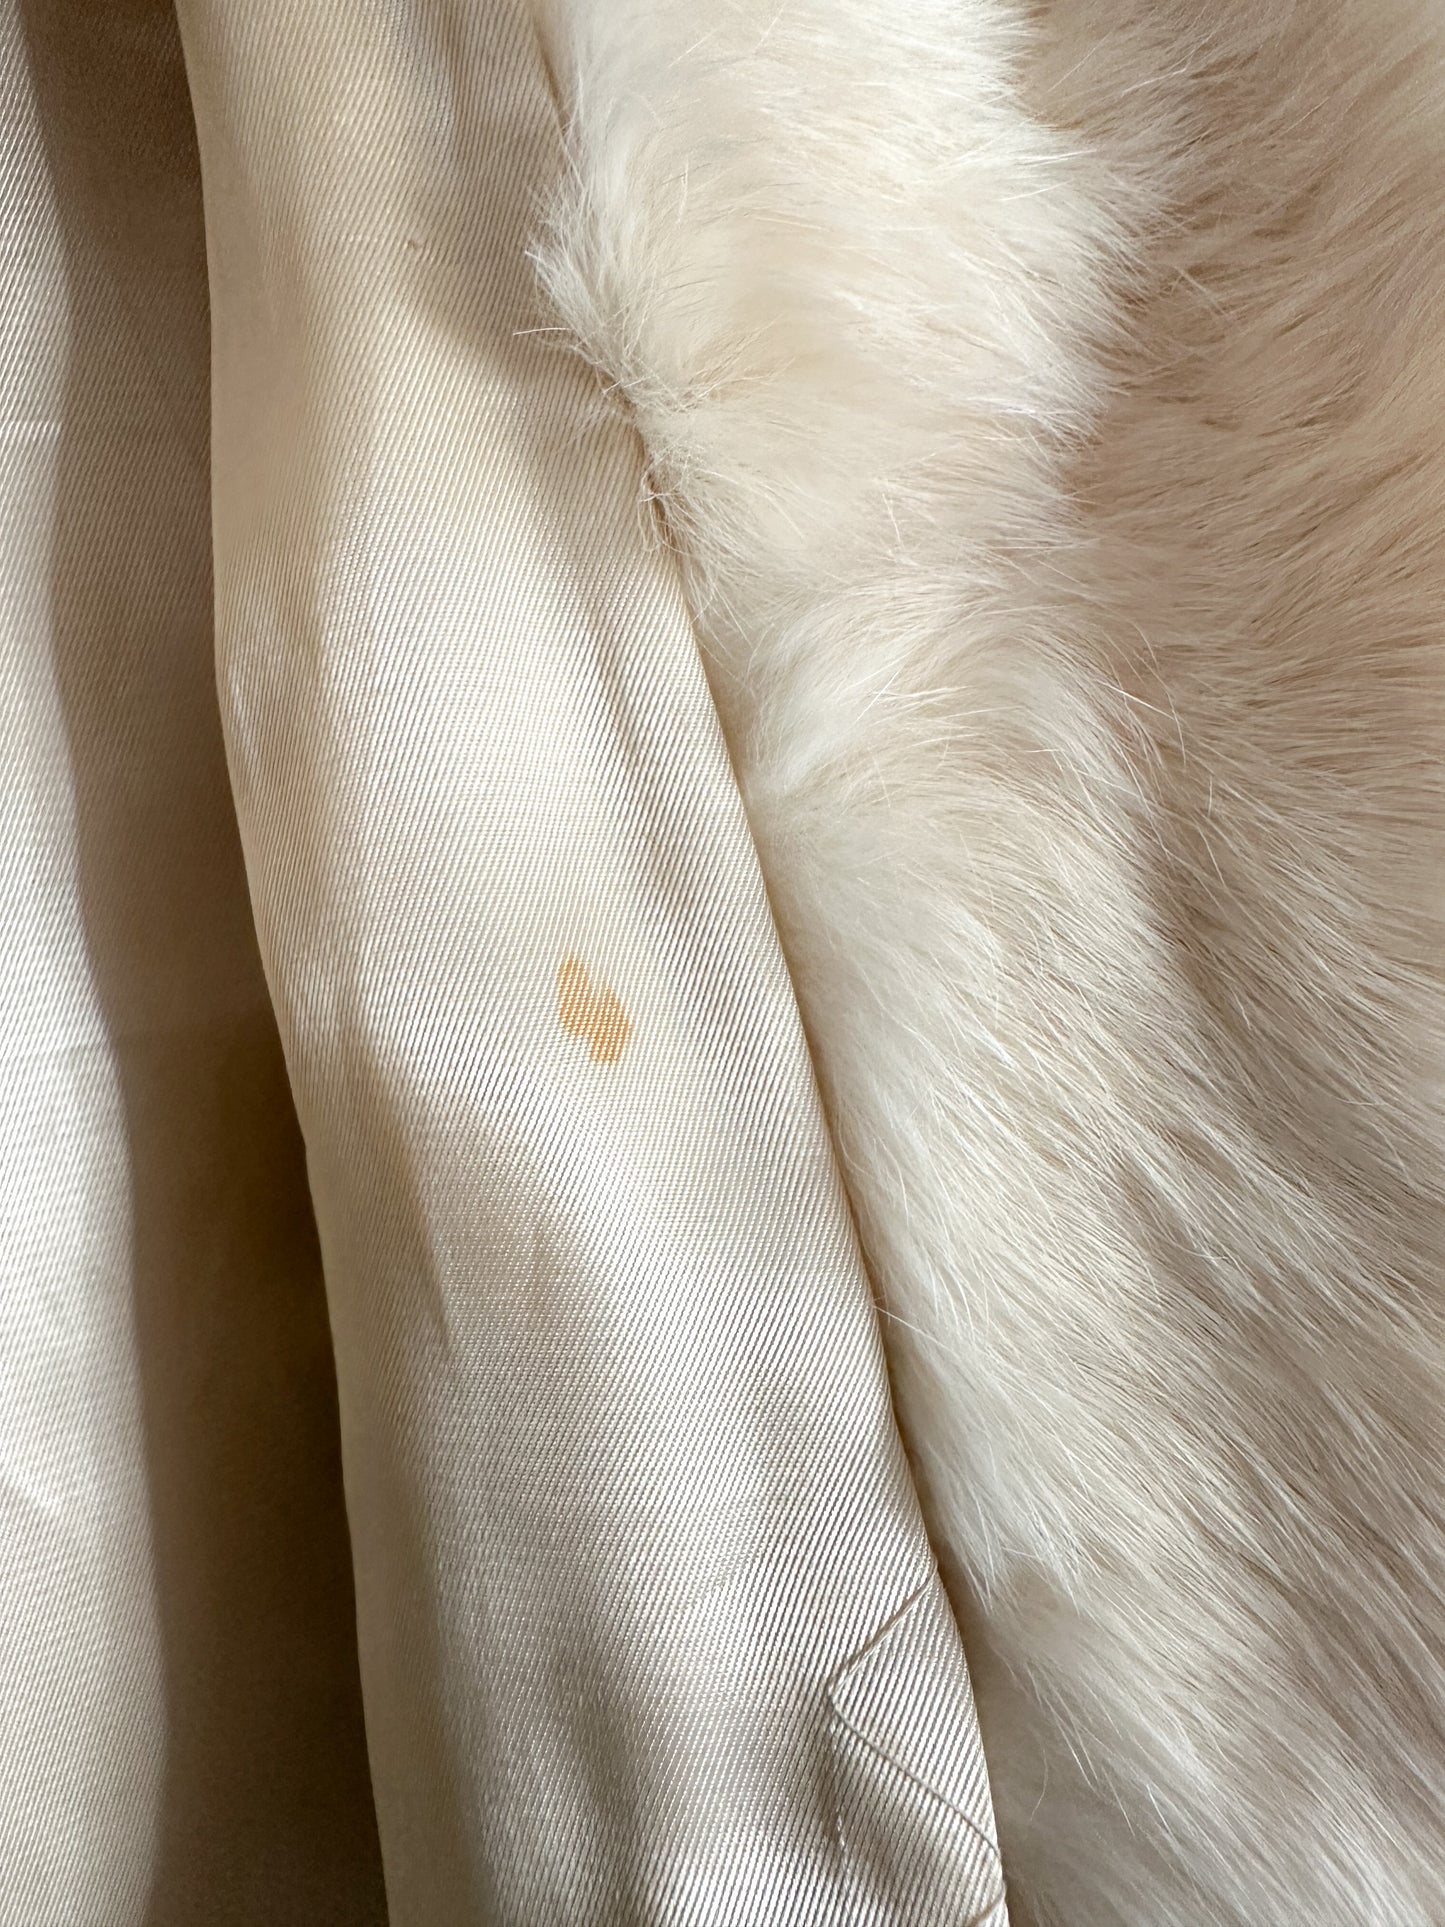 Vintage Cream Fur Coat | Size: XS | Fully Lined Fur Coat